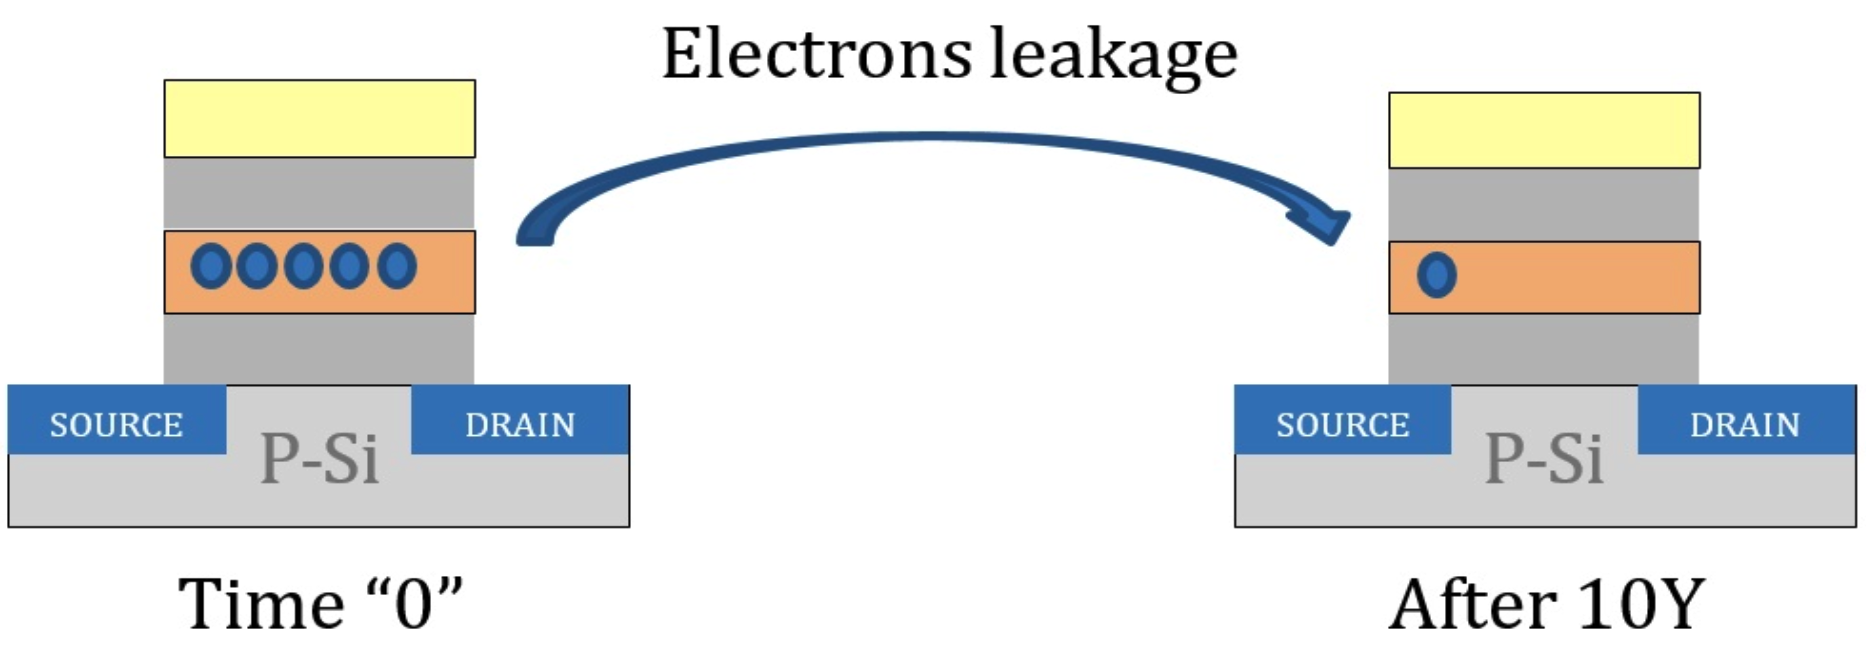 electrons-leakage